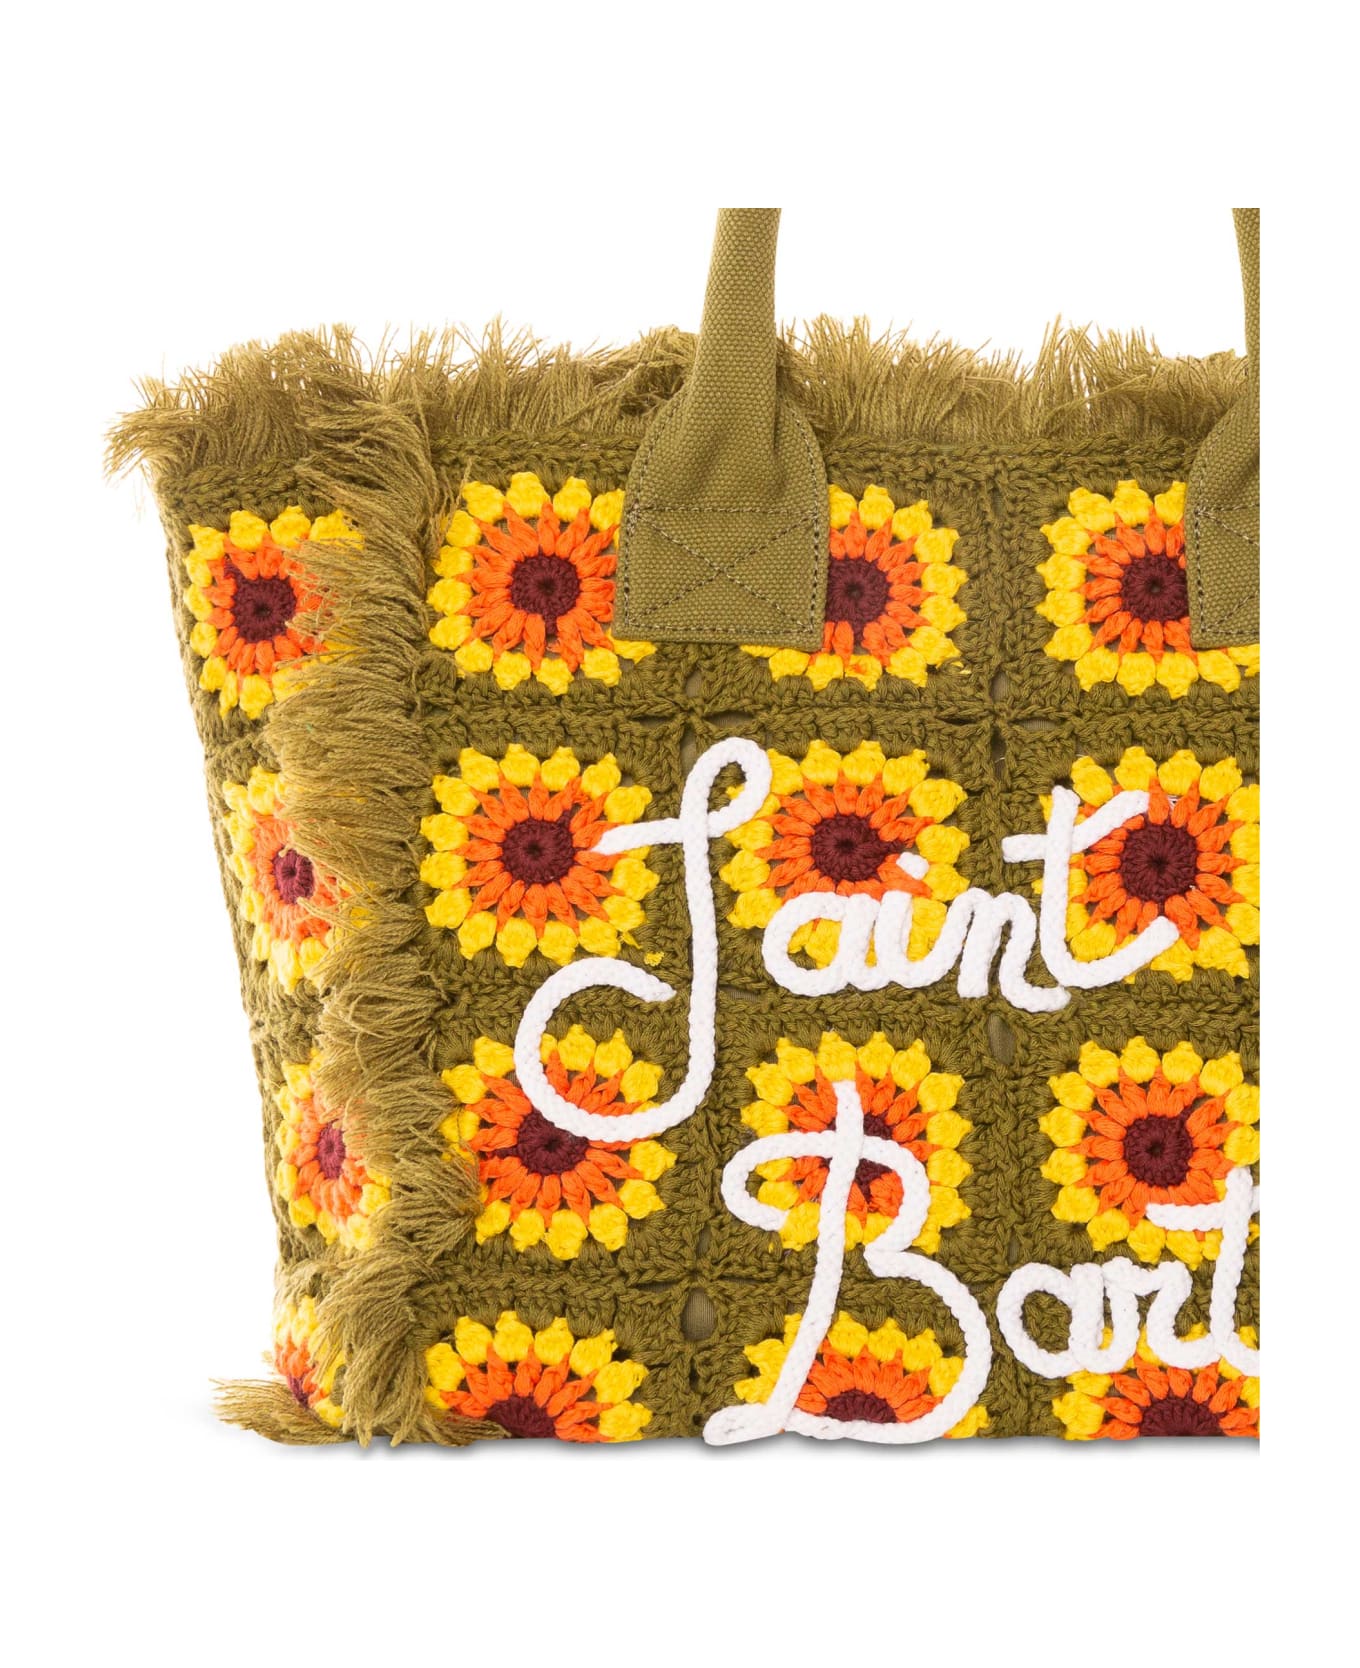 MC2 Saint Barth Vanity Crochet Flower Shoulder Bag - GREEN